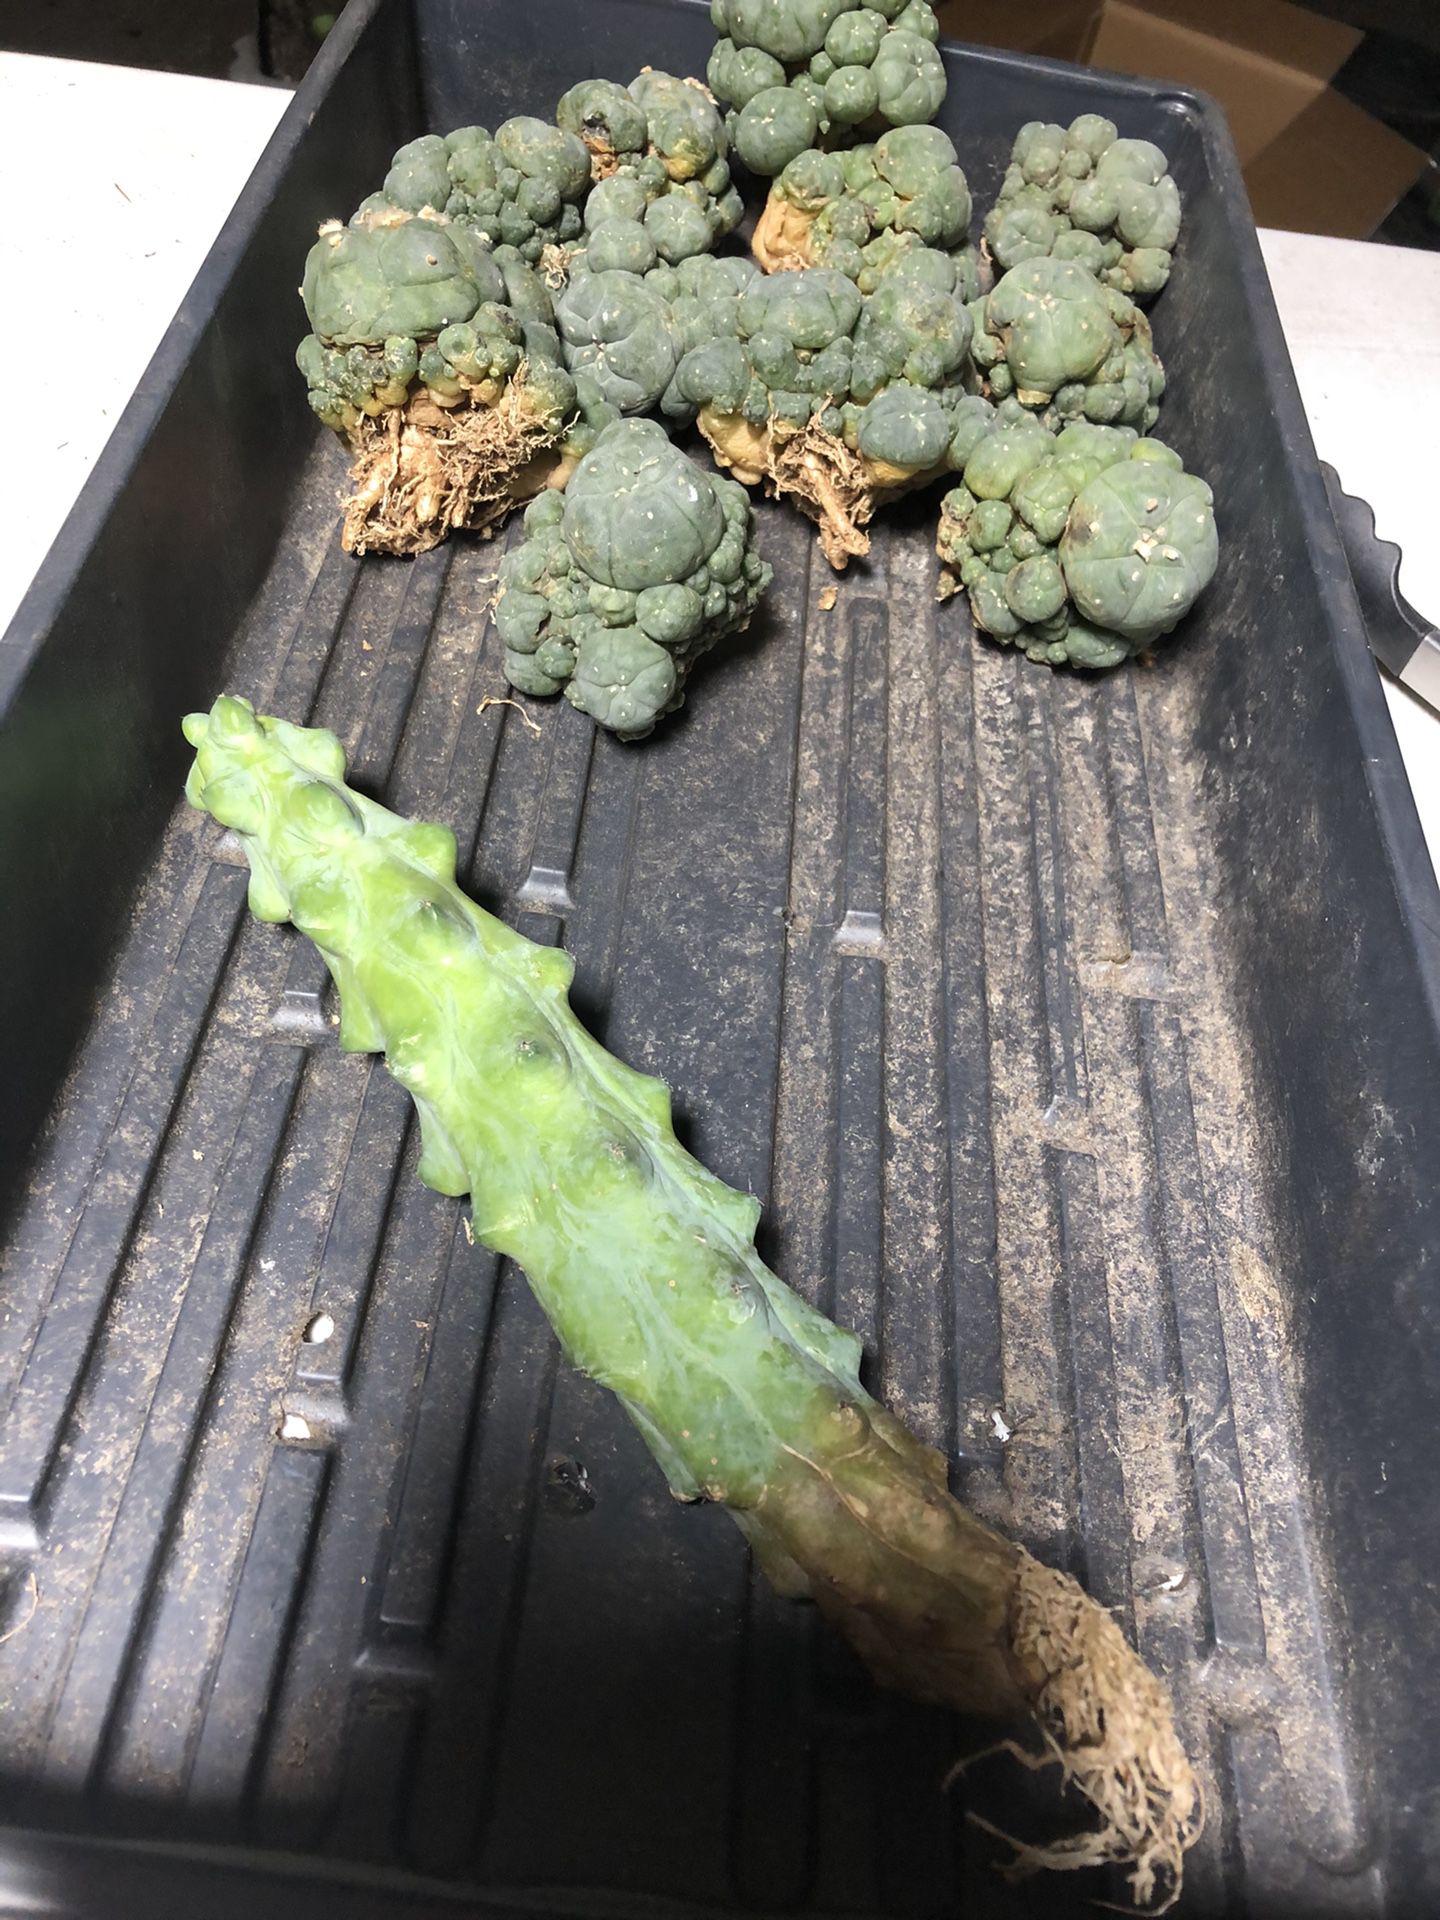 1 myrtillocactus, 8” long, $35